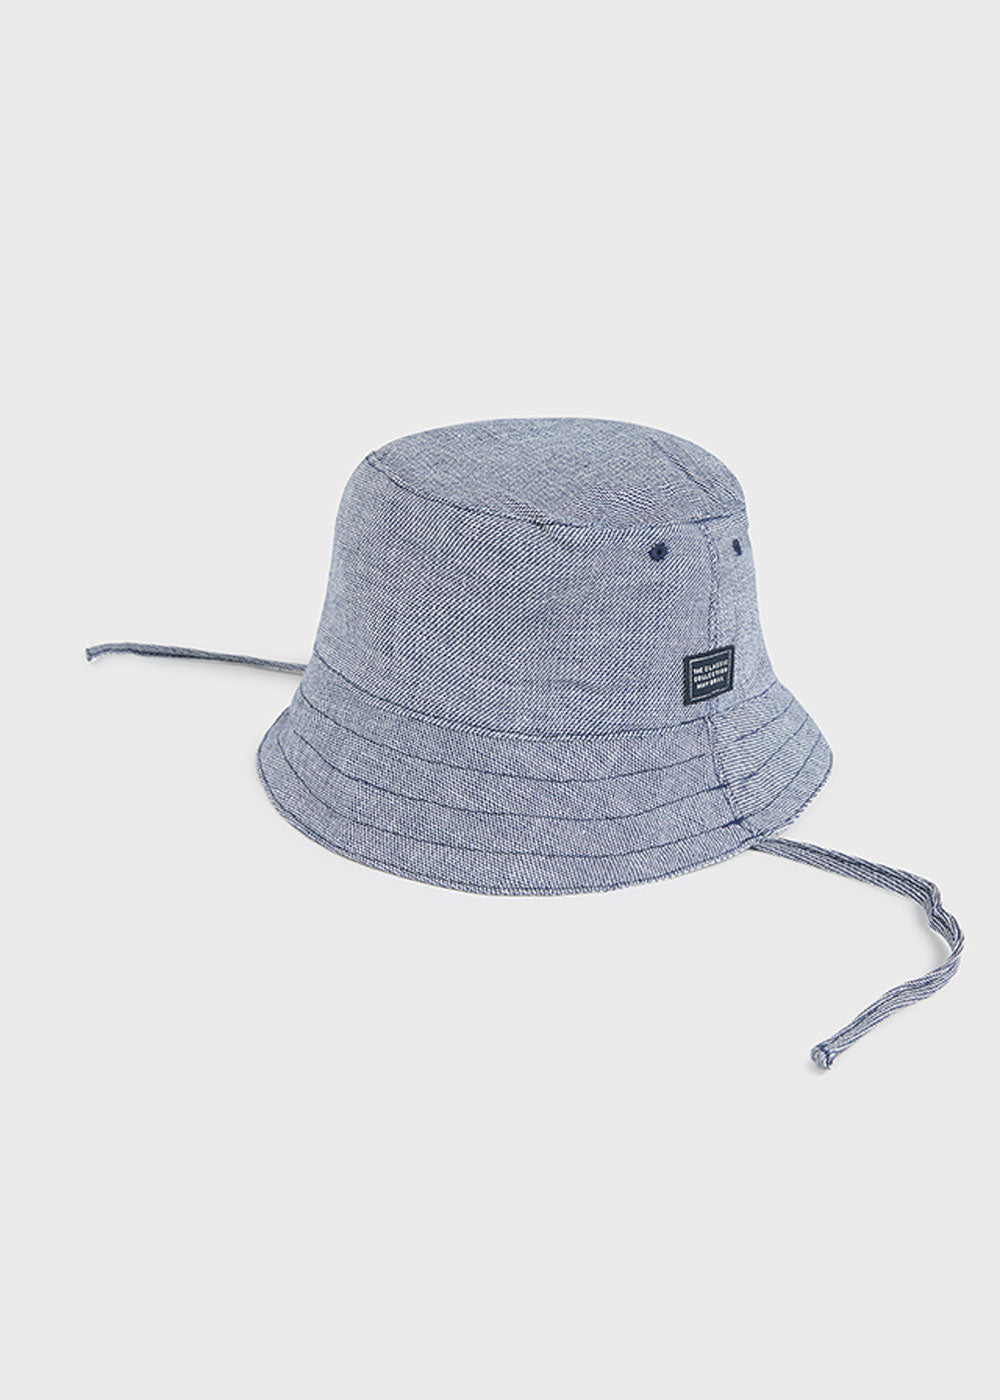 MAYORAL Cappello MAYORAL da BAMBINO - blu